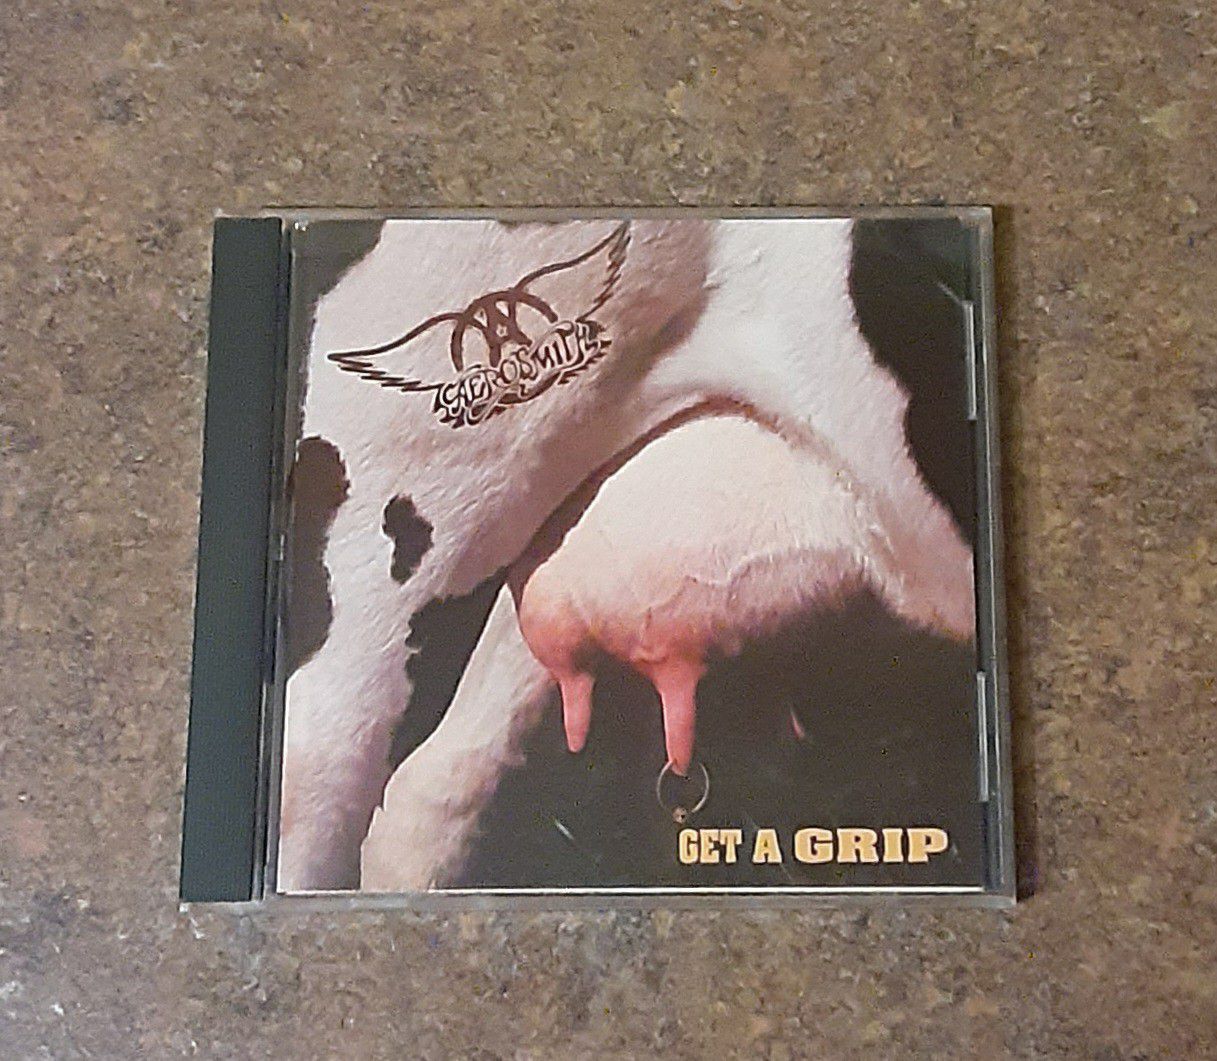 Aerosmith "Get A Grip" Compact Disc Music CD